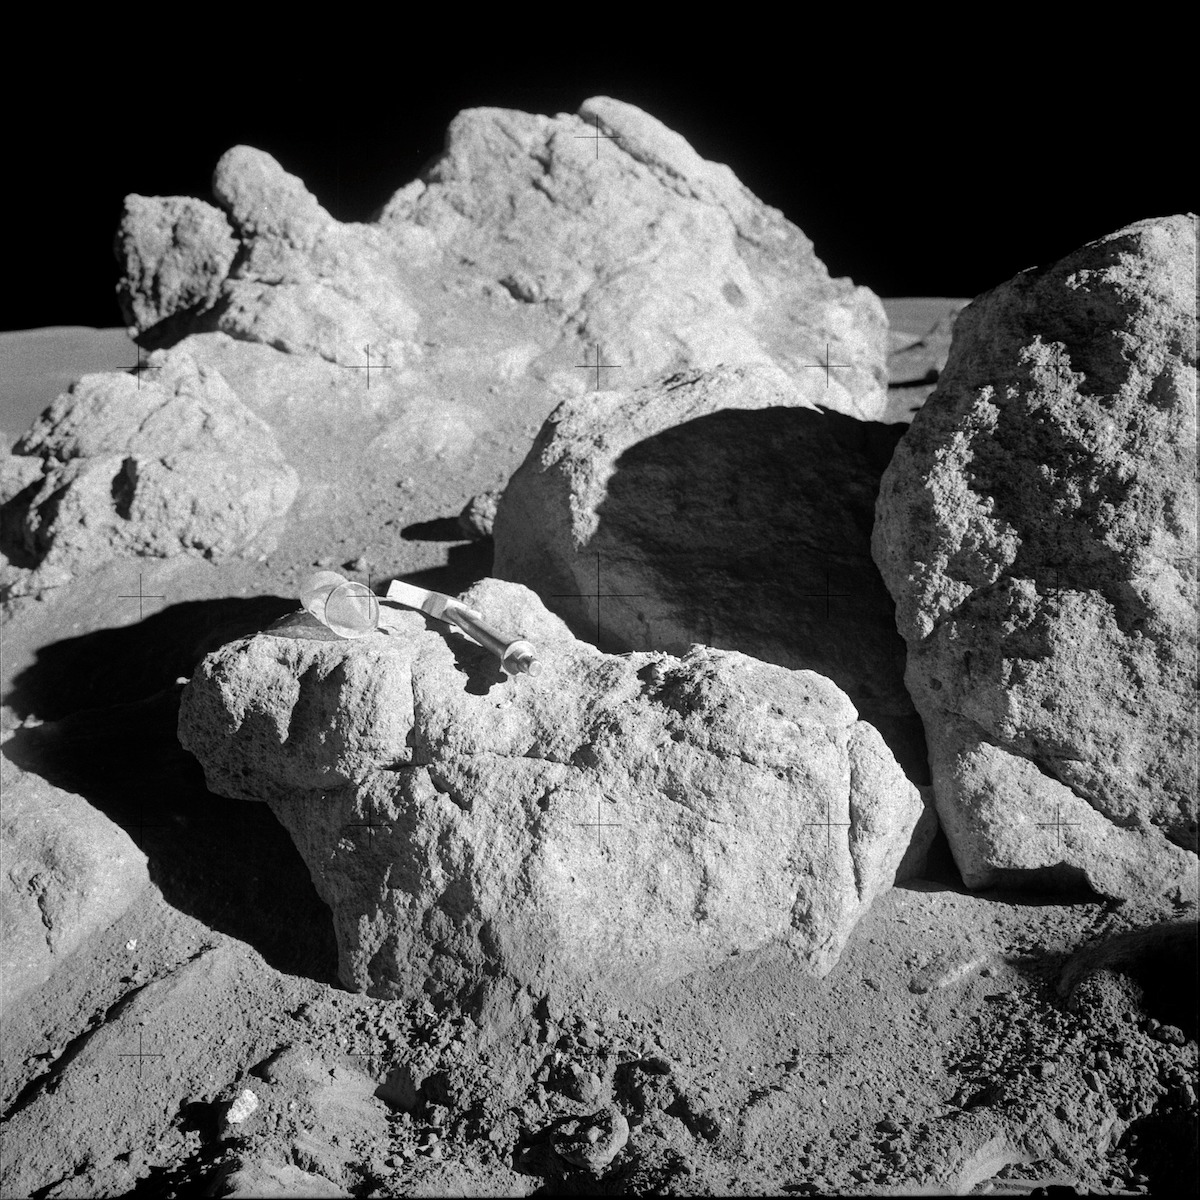 large, white, broken boulder with geologist hammer